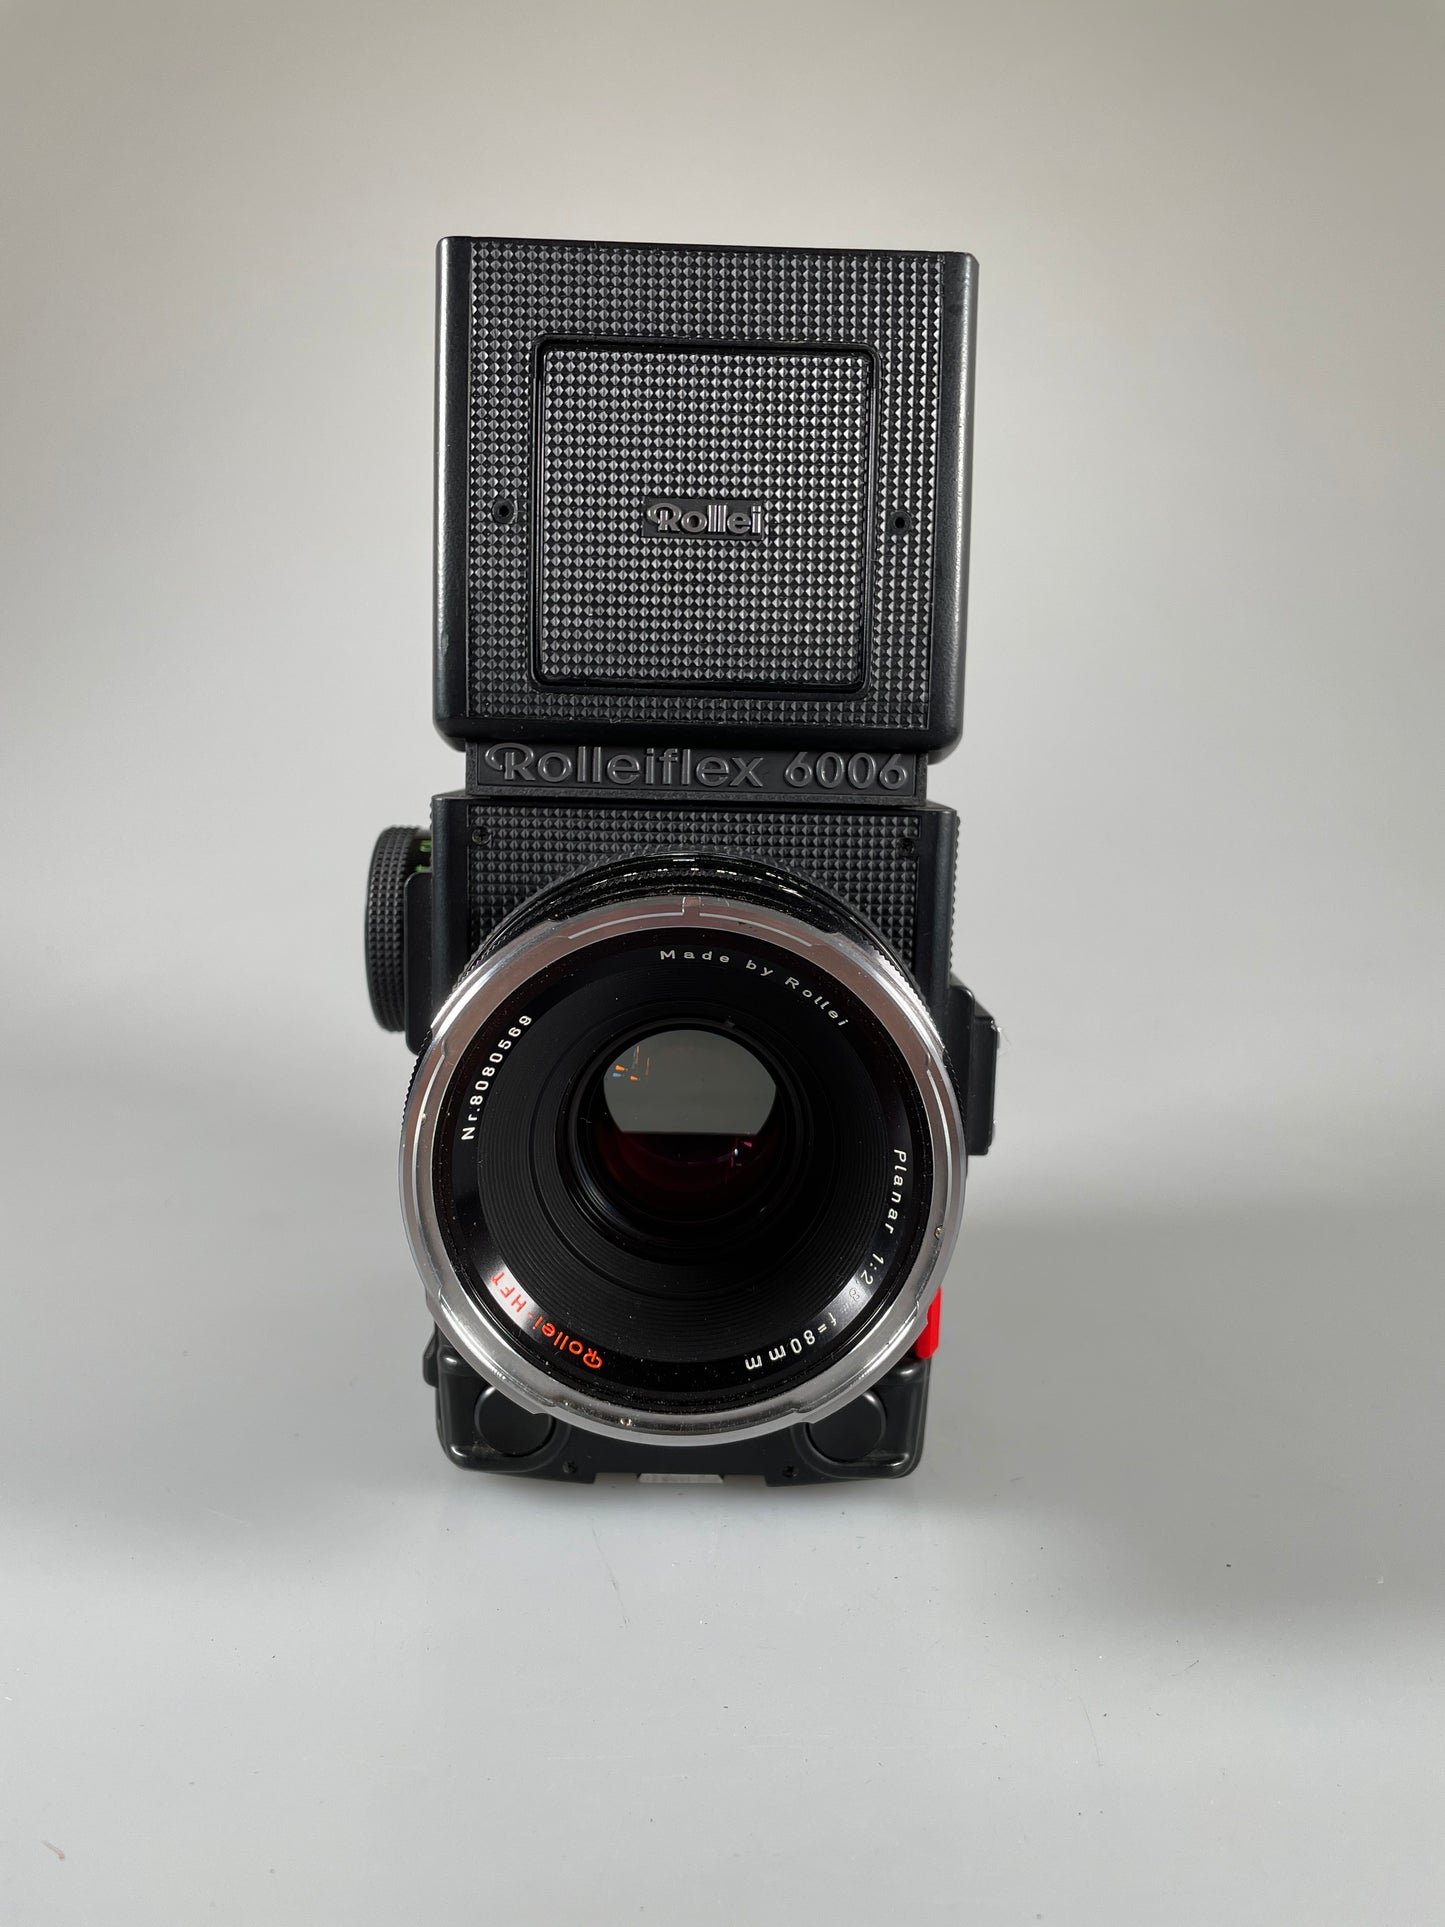 Rollei Rolleiflex 6006 Body & HFT Planar 80mm F2.8 Lens, 120 Film Magazine